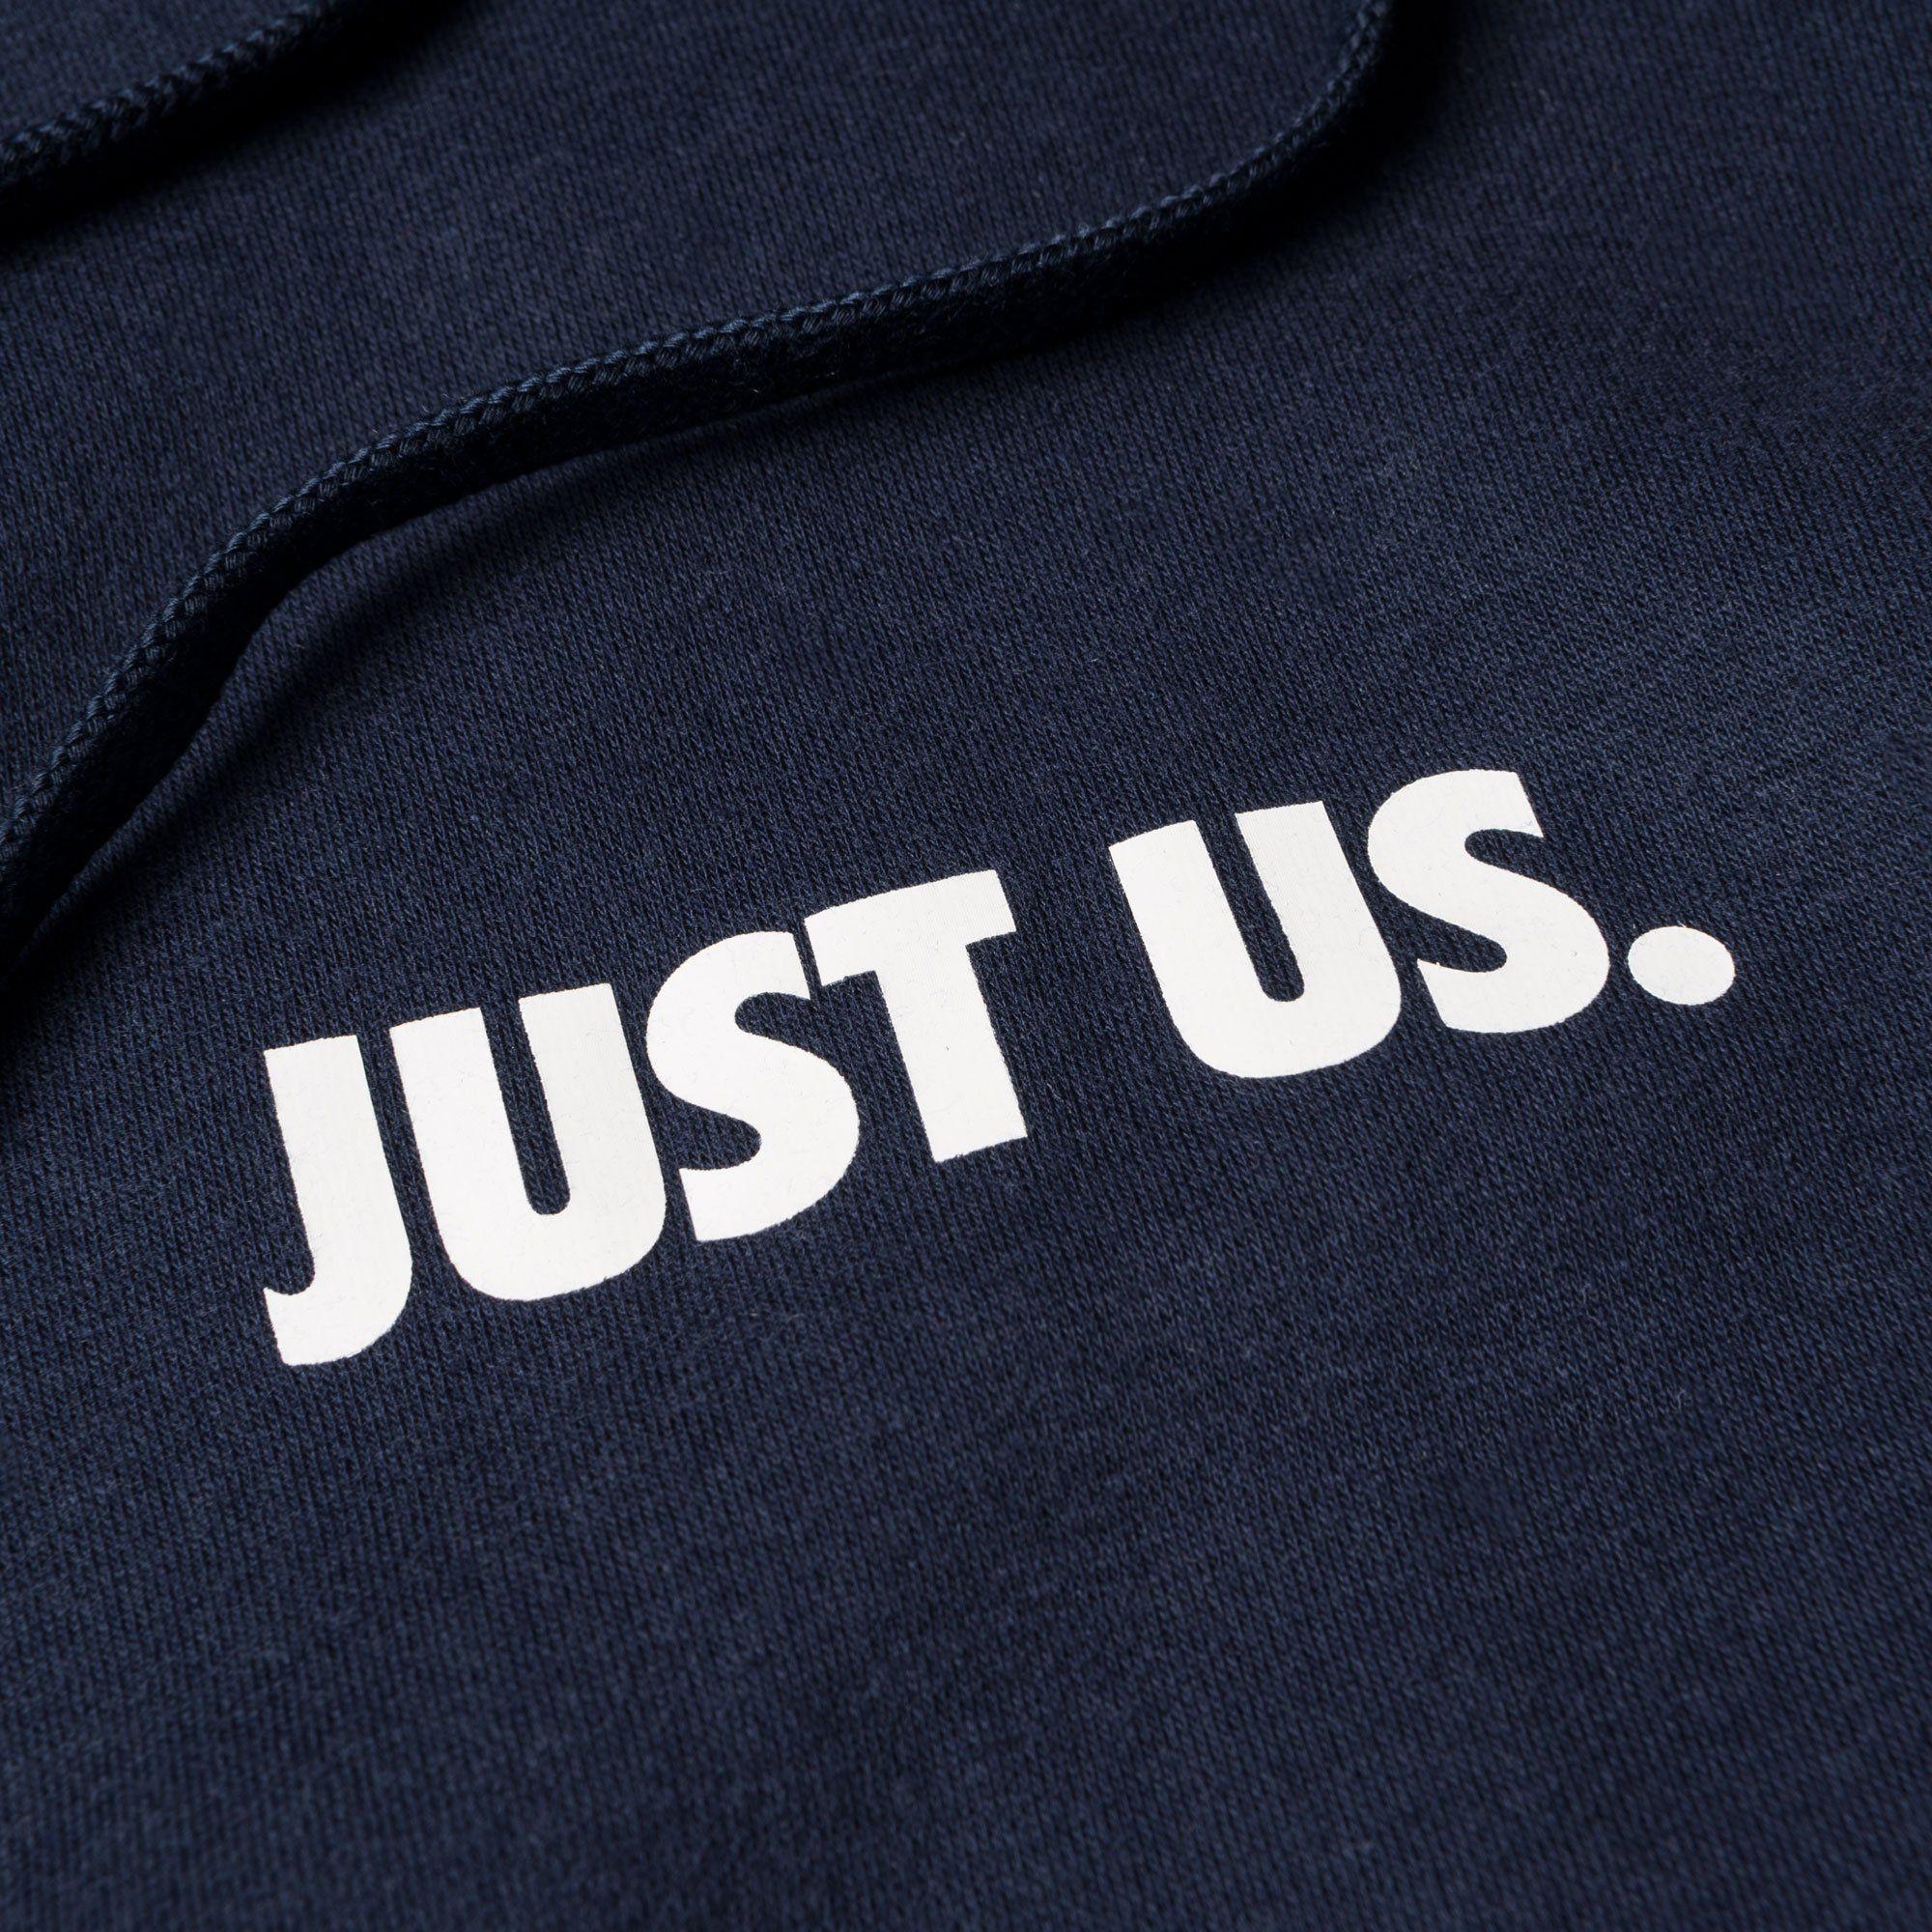 Kith Just Us Logo - Kith x Nike Just Us Hoodie - Navy